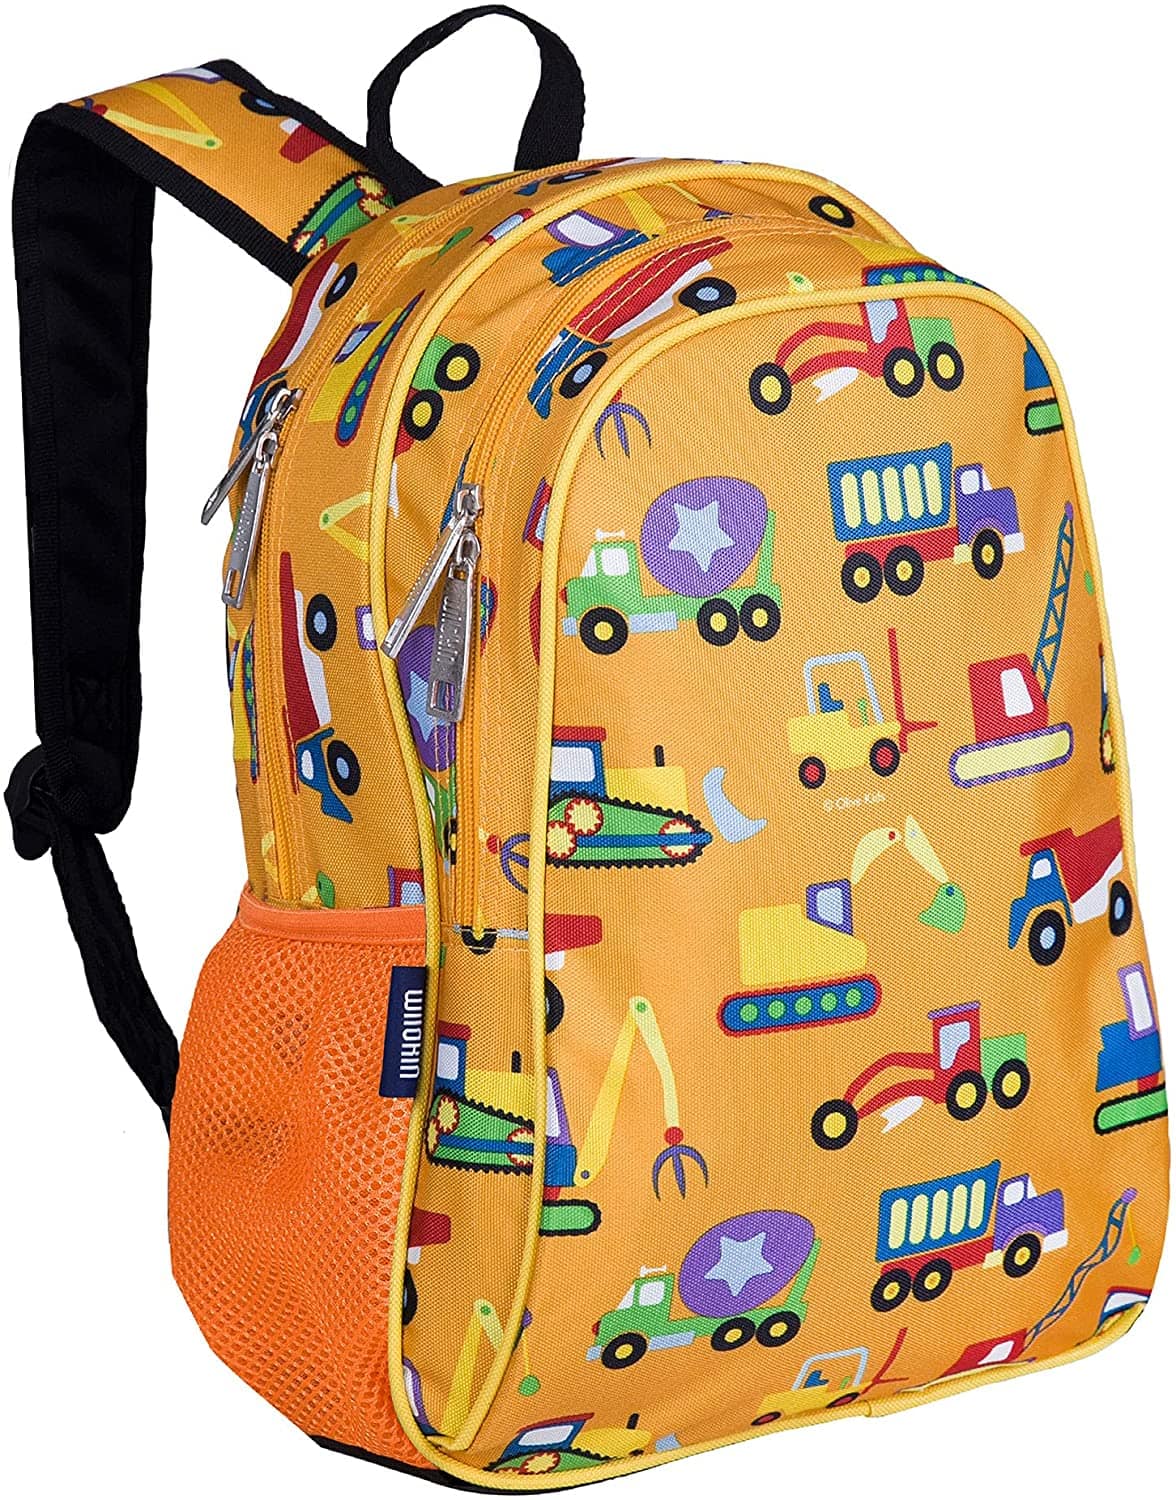 Wildkin Backpack-1